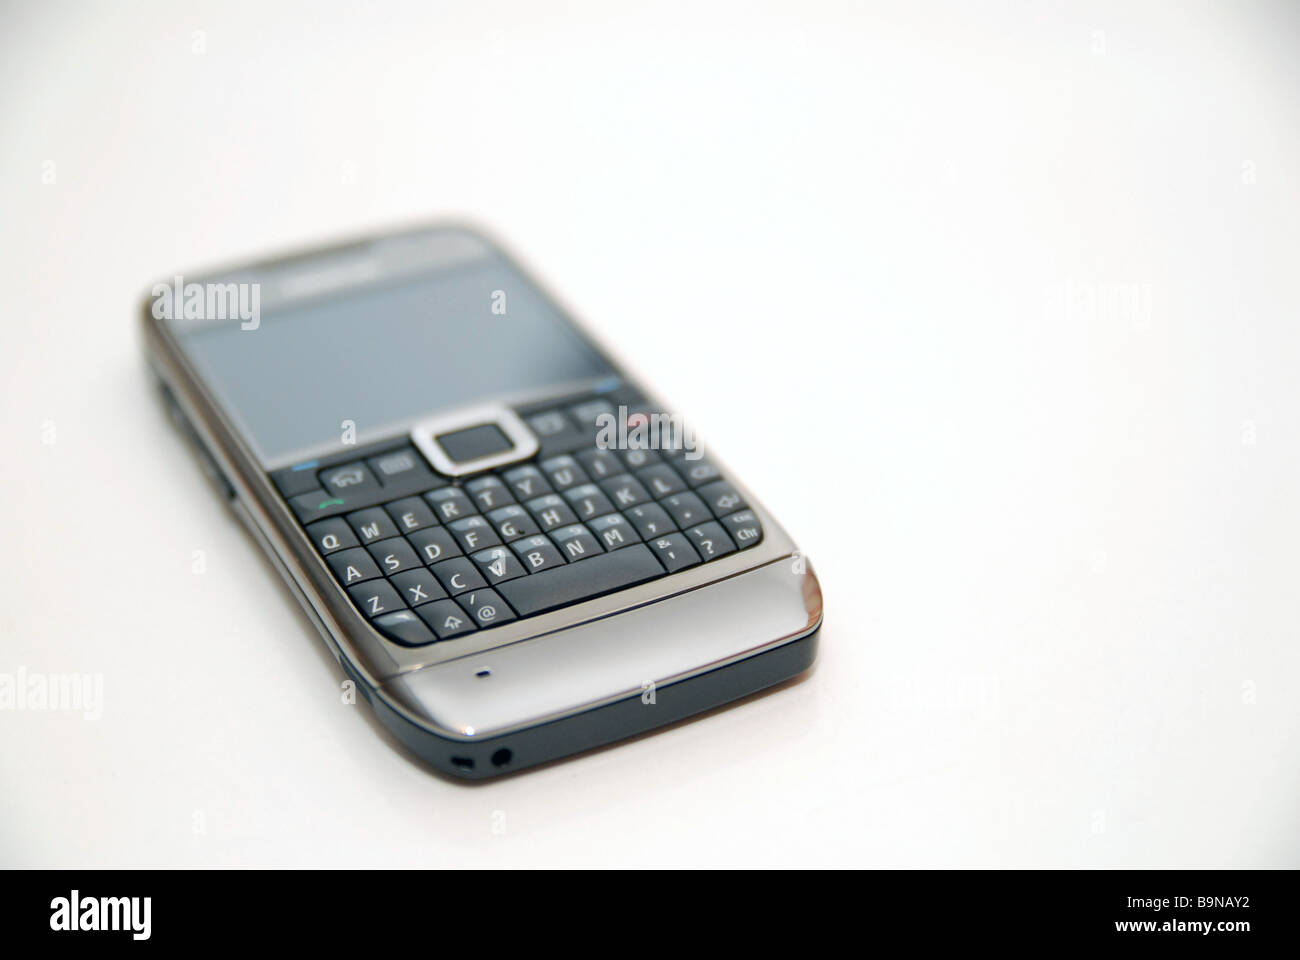 Un teléfono móvil Nokia/dispositivo con teclado QWERTY completo. Foto de stock